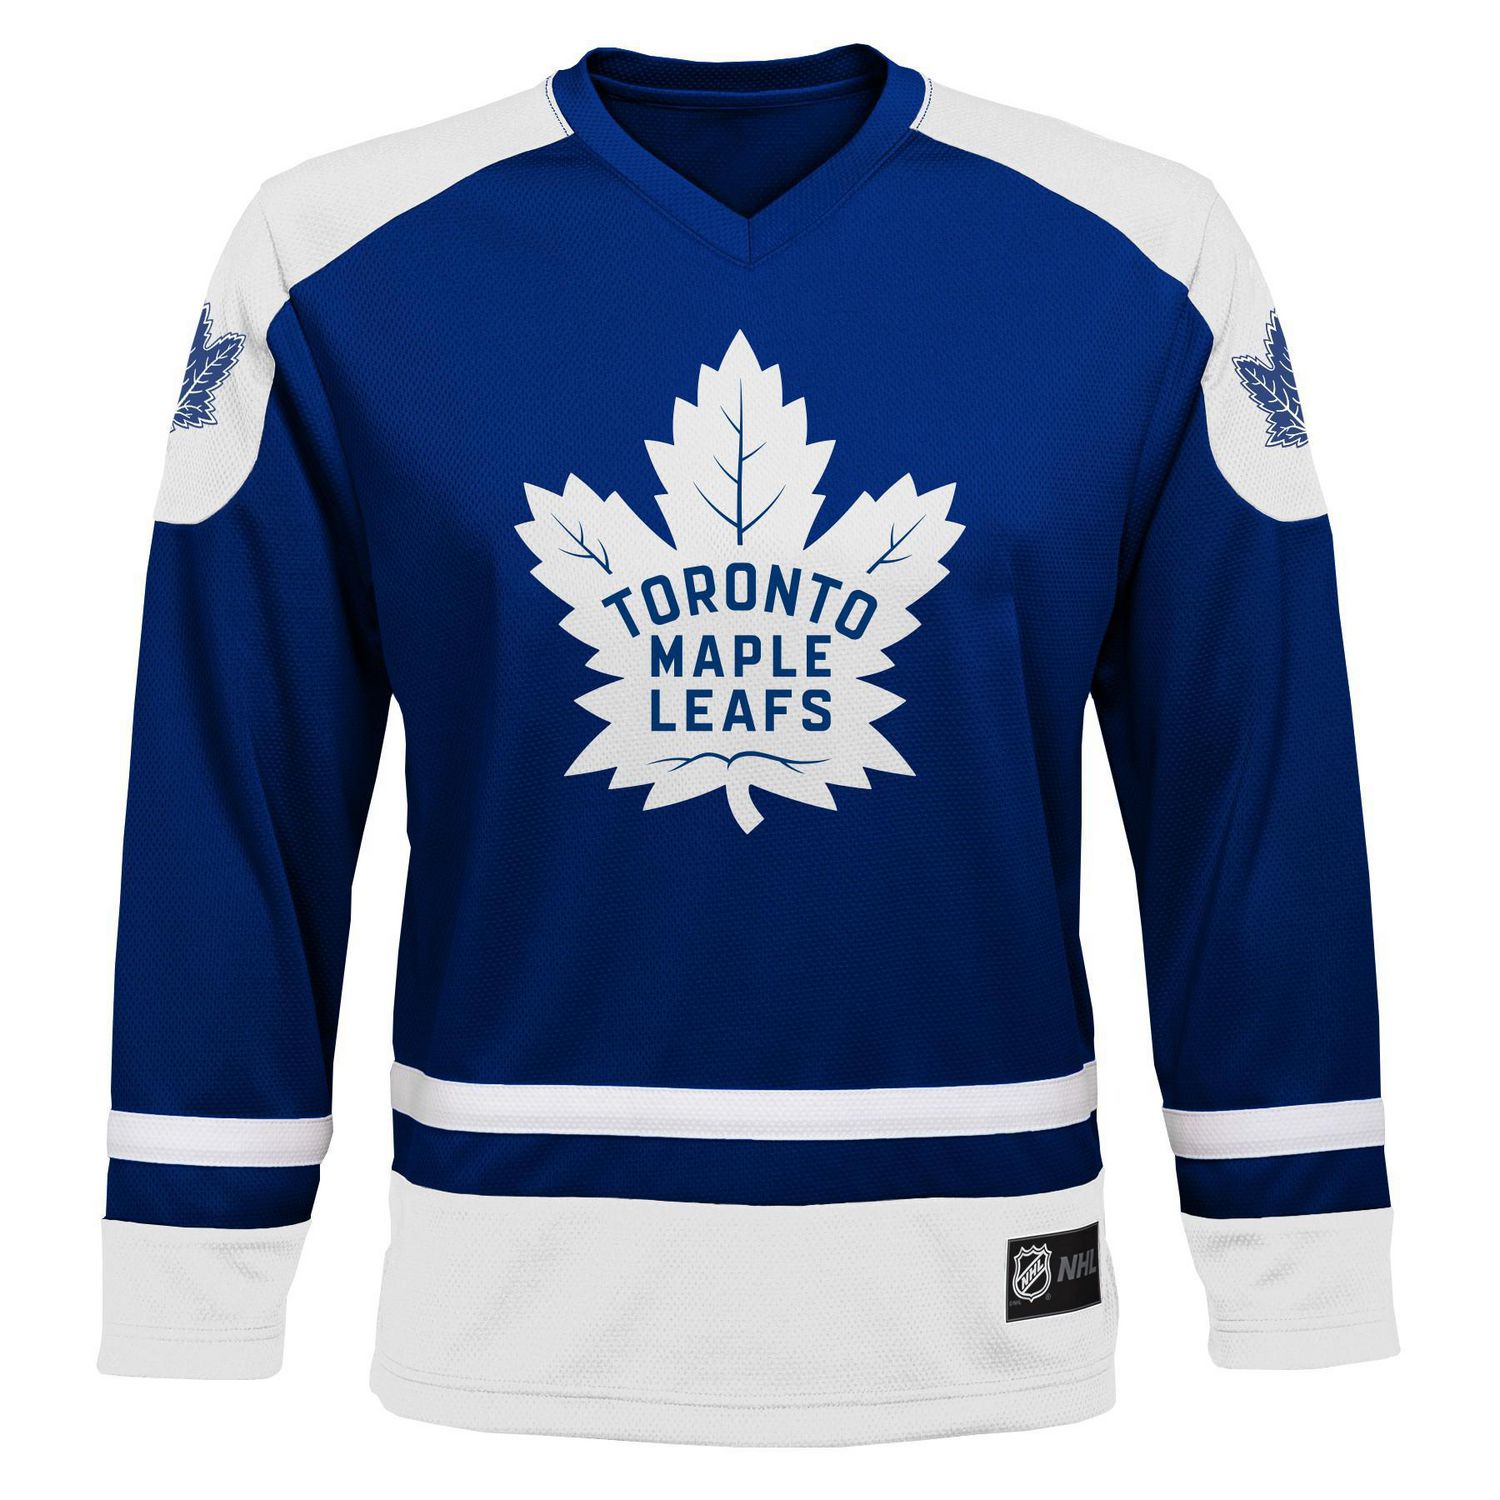 Vintage Toronto Maple Leafs NHL Hockey Jersey Super - Depop